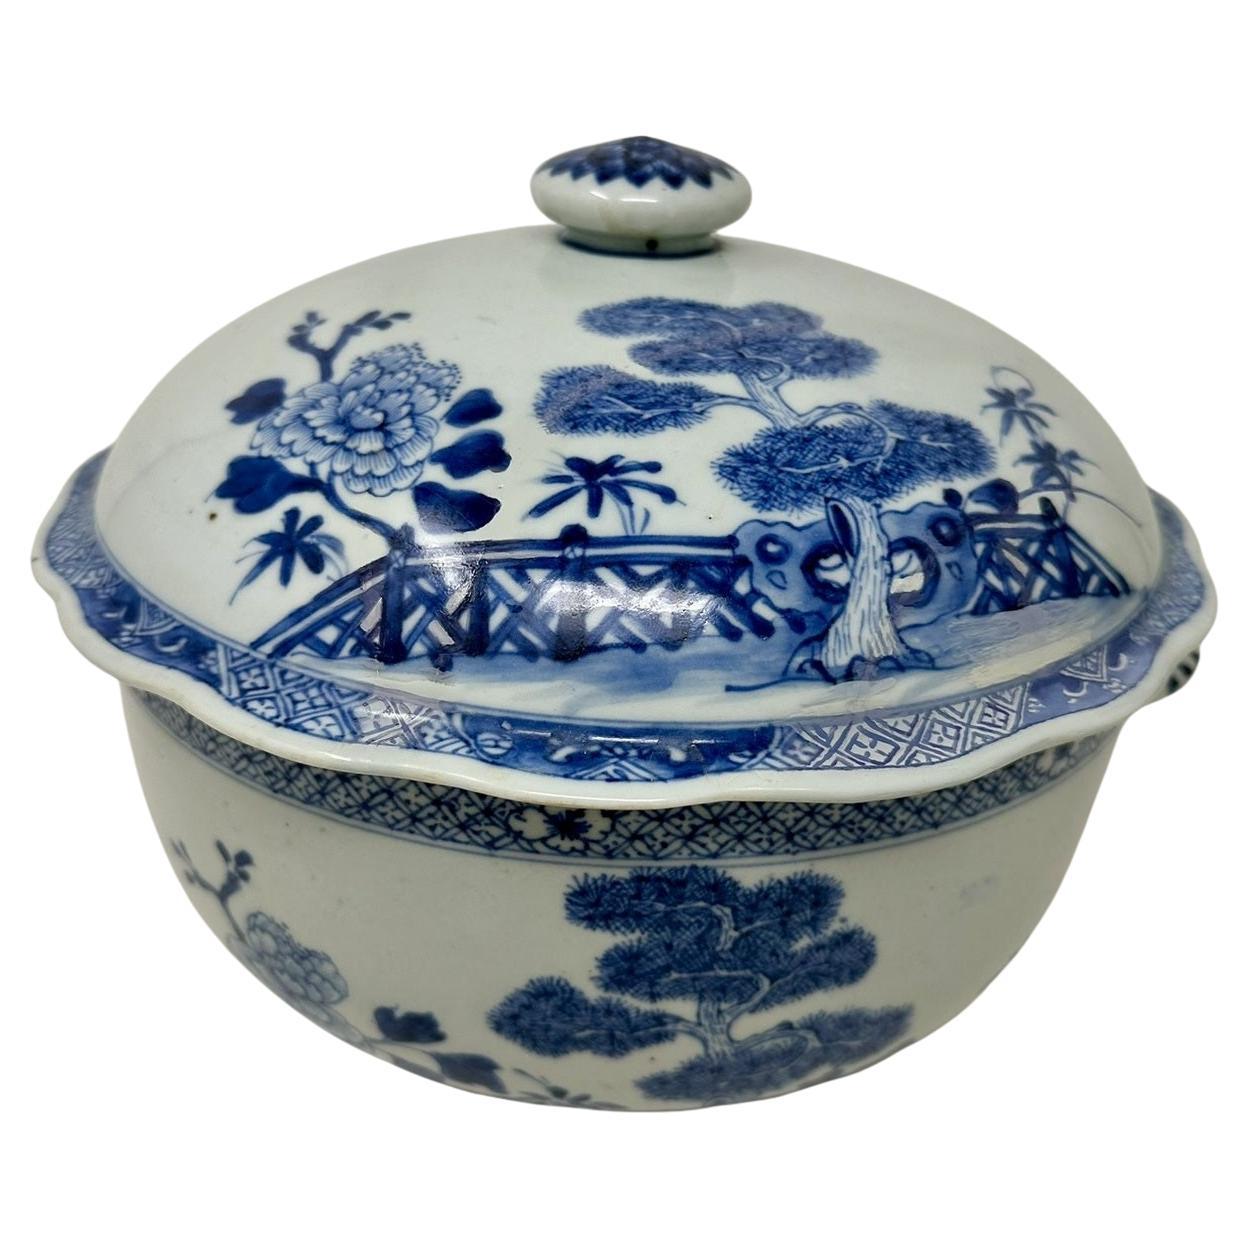 Antique Chinese Export Porcelain Blue White Chien Lung Soup Tureen Centerpiece